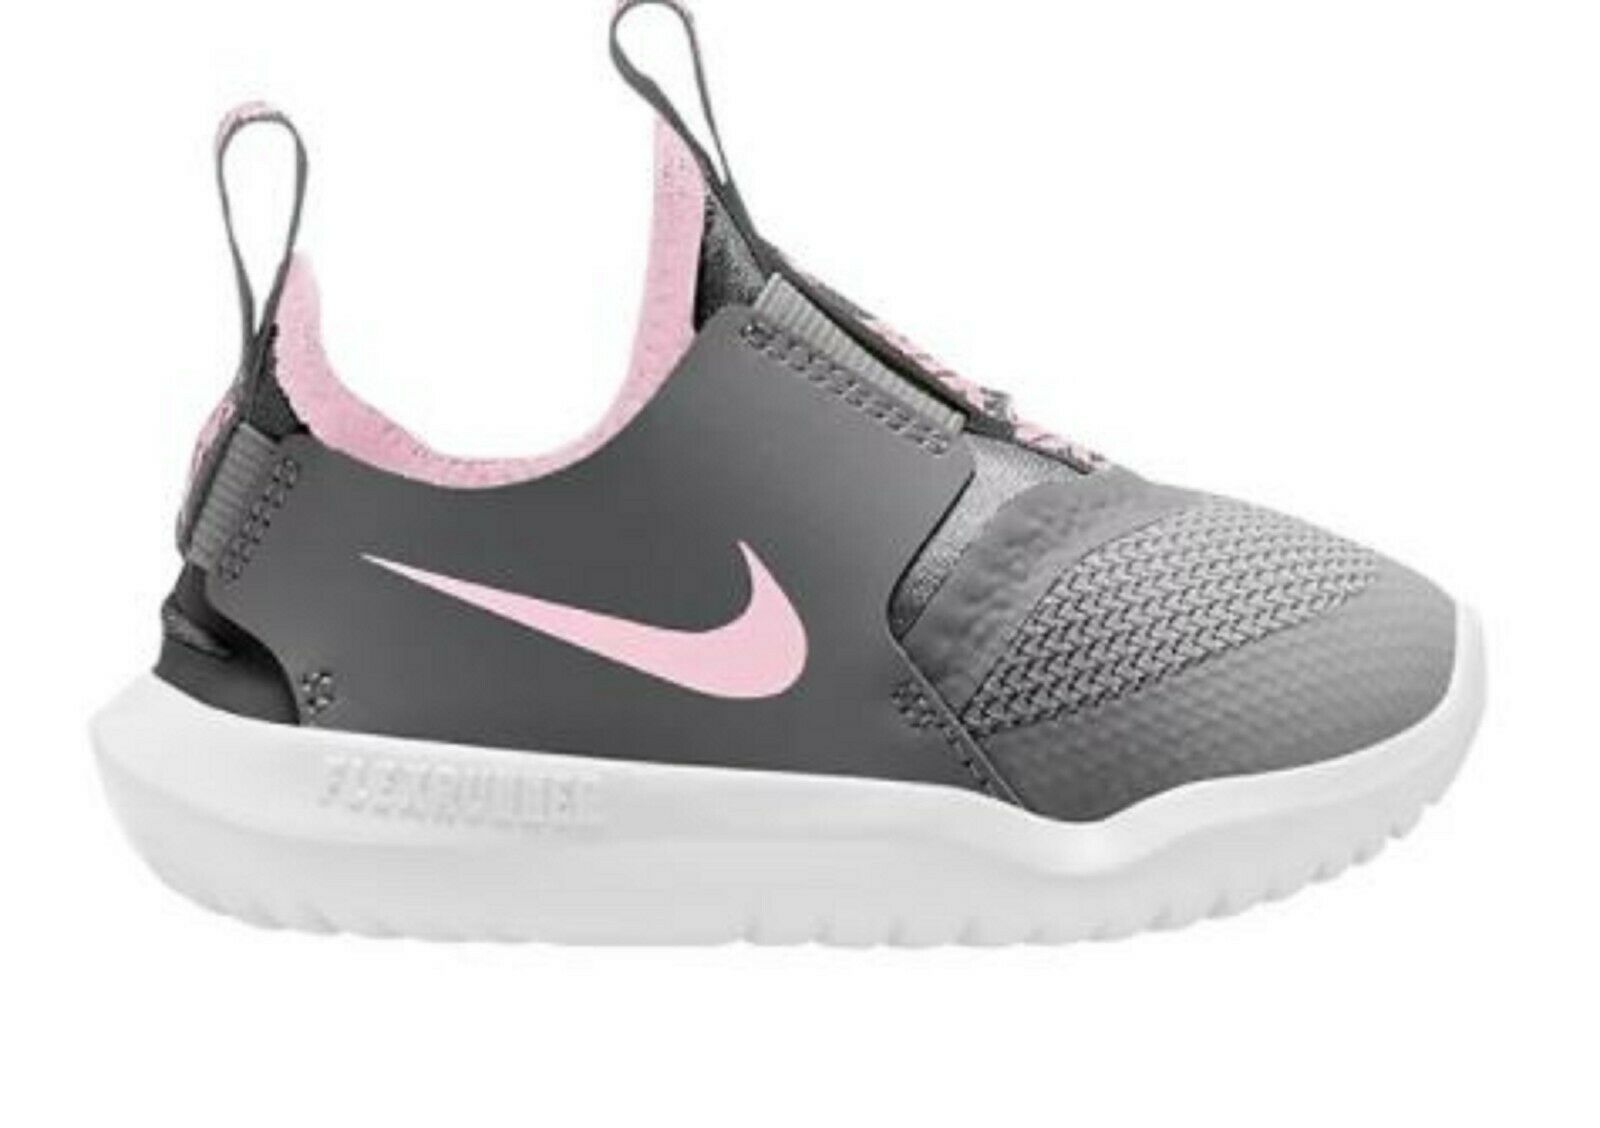 Nike Flex Runner Infant Girl’s Tennis Athletic Shoes Sneaker Size 3C Grey Pink